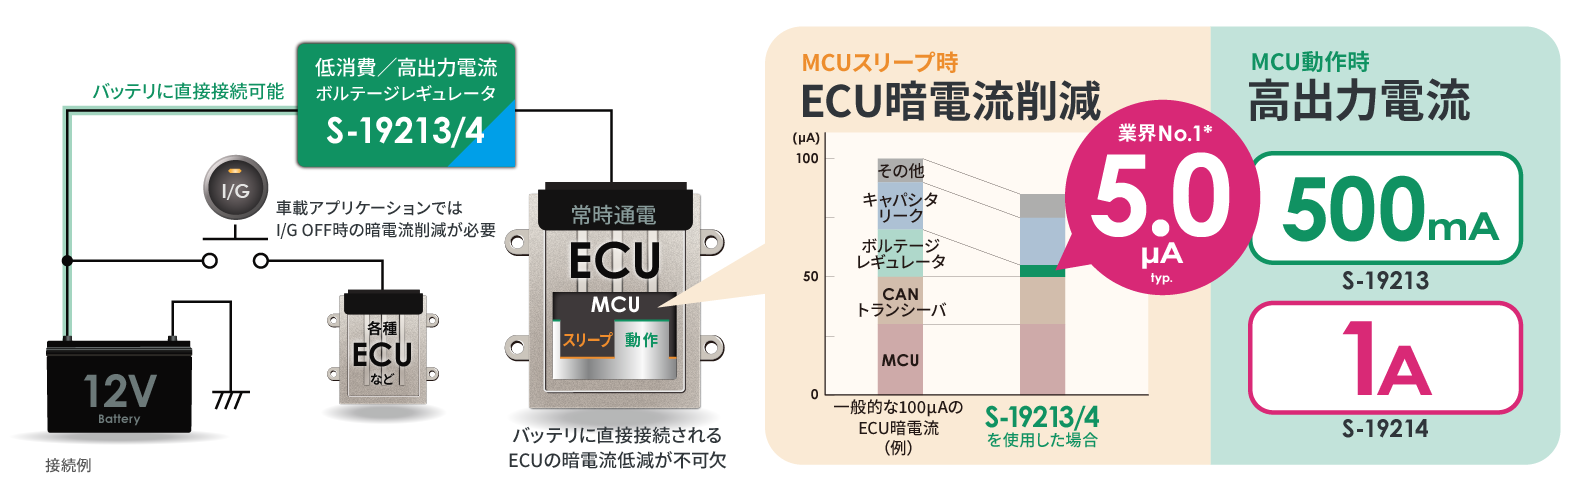 ECUの暗電流削減と動作時の高出力電流を両立   - MCUスリープ時には超低消費電流が、動作時には高出力電流がお役立ち -